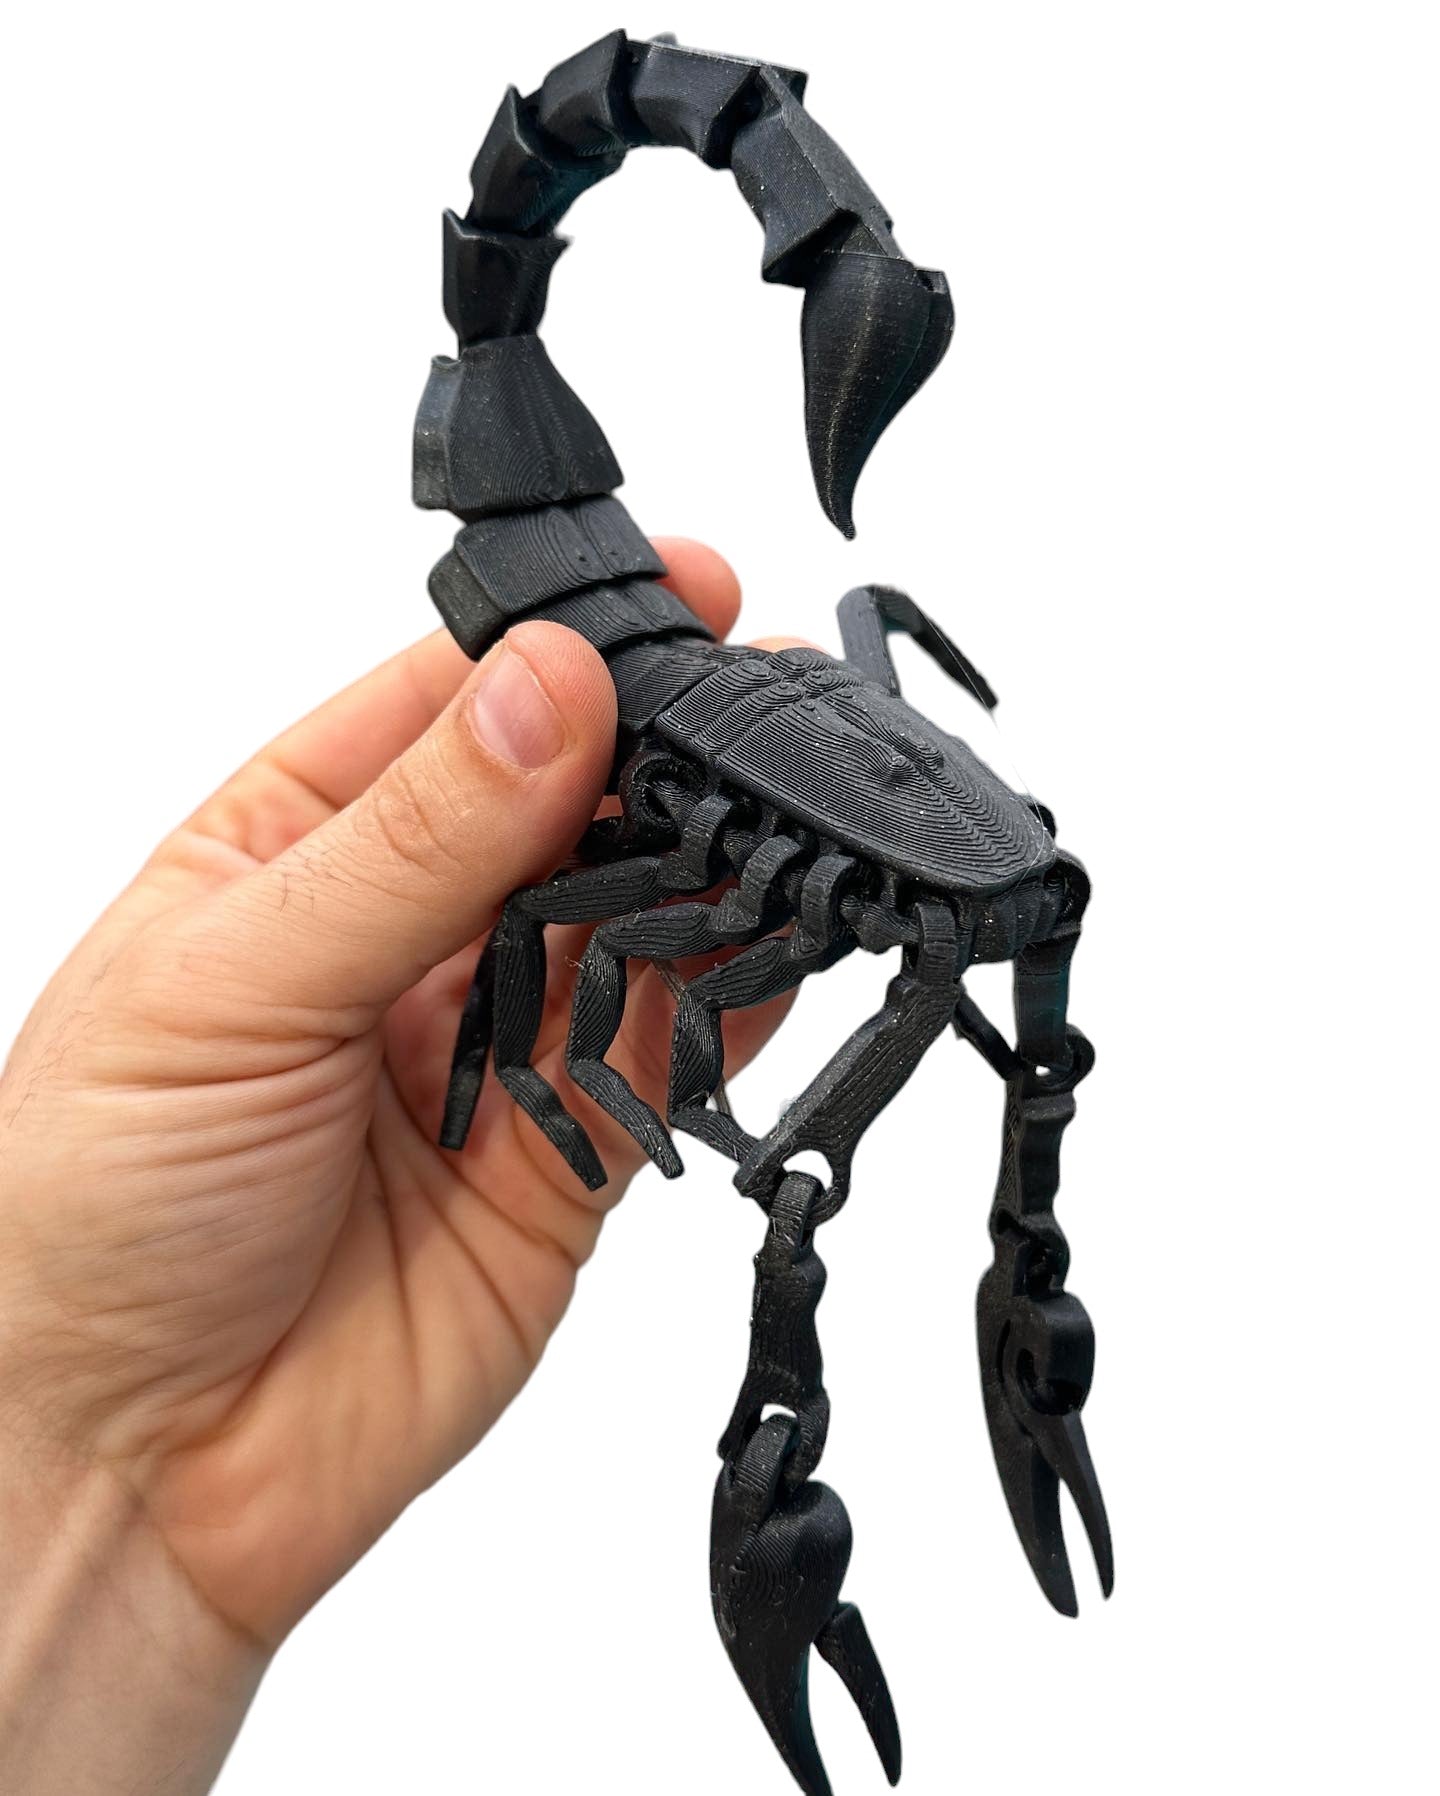 3D Printed Scorpion